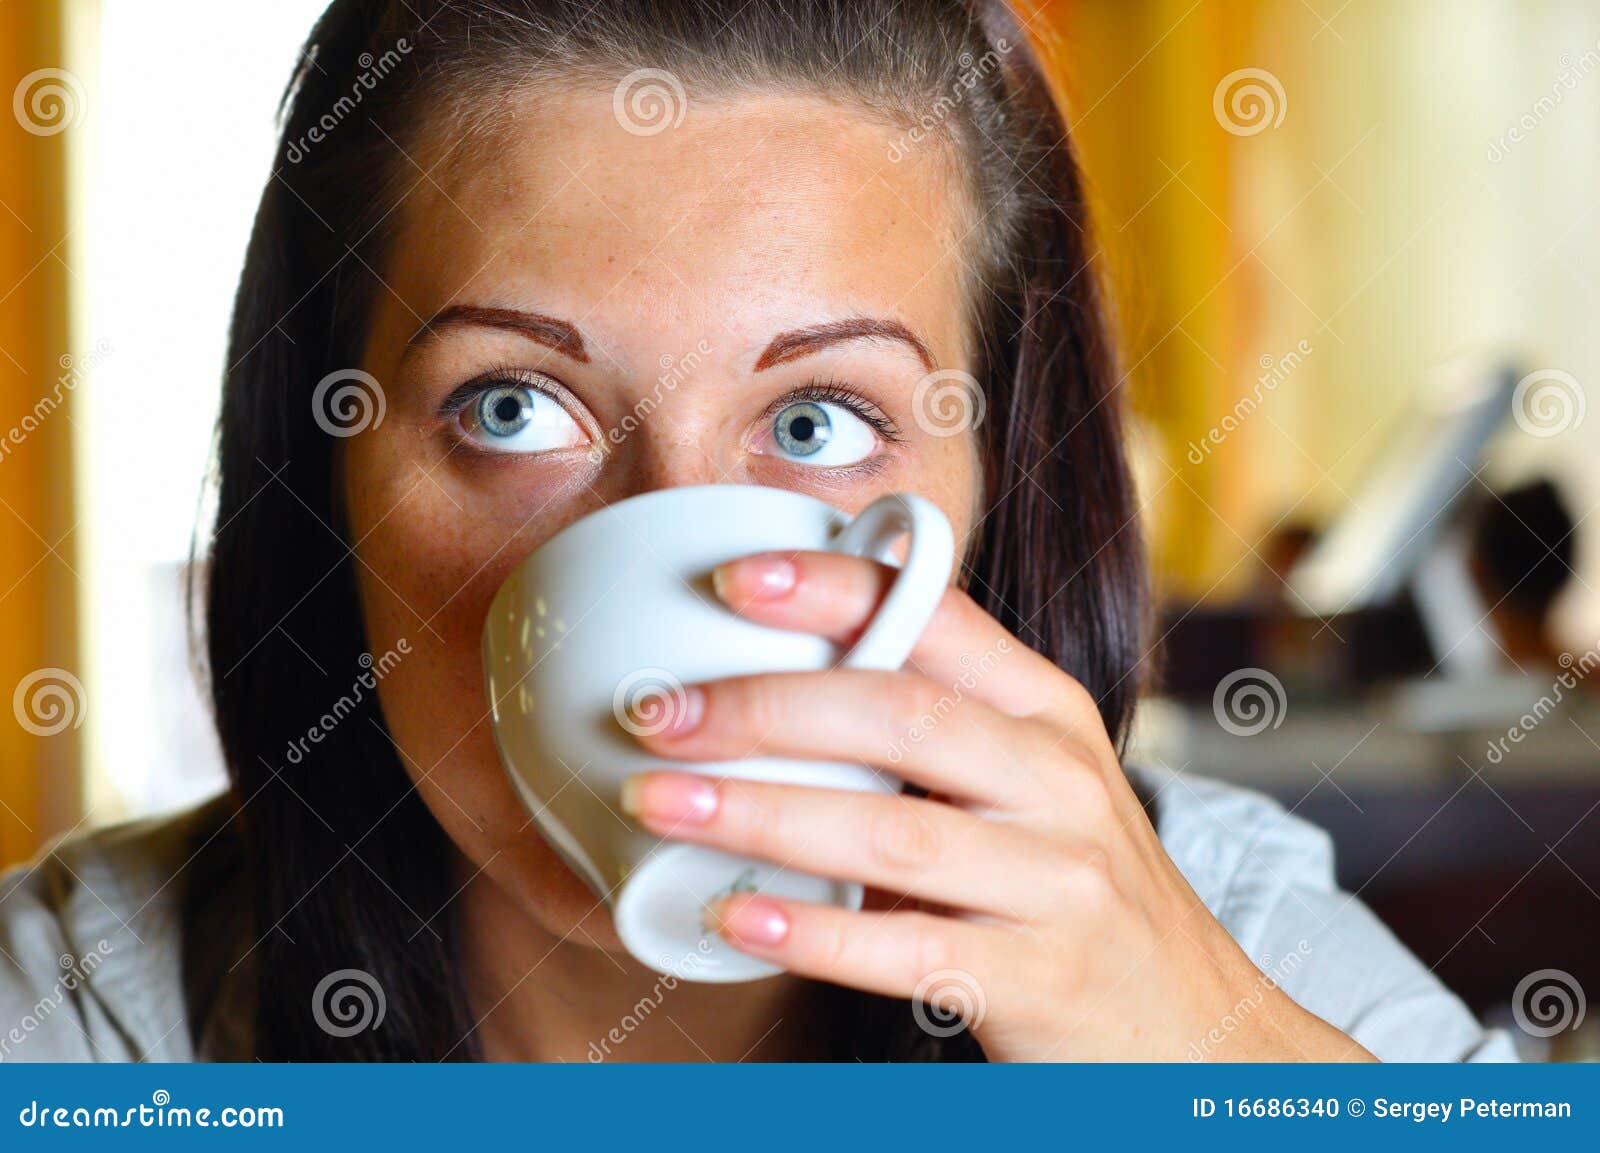 Cup a feel. Девушка пьет из чашки. Девушка пьет из кружки. Человек пьет из кружки. Чайные глаза фото женские.